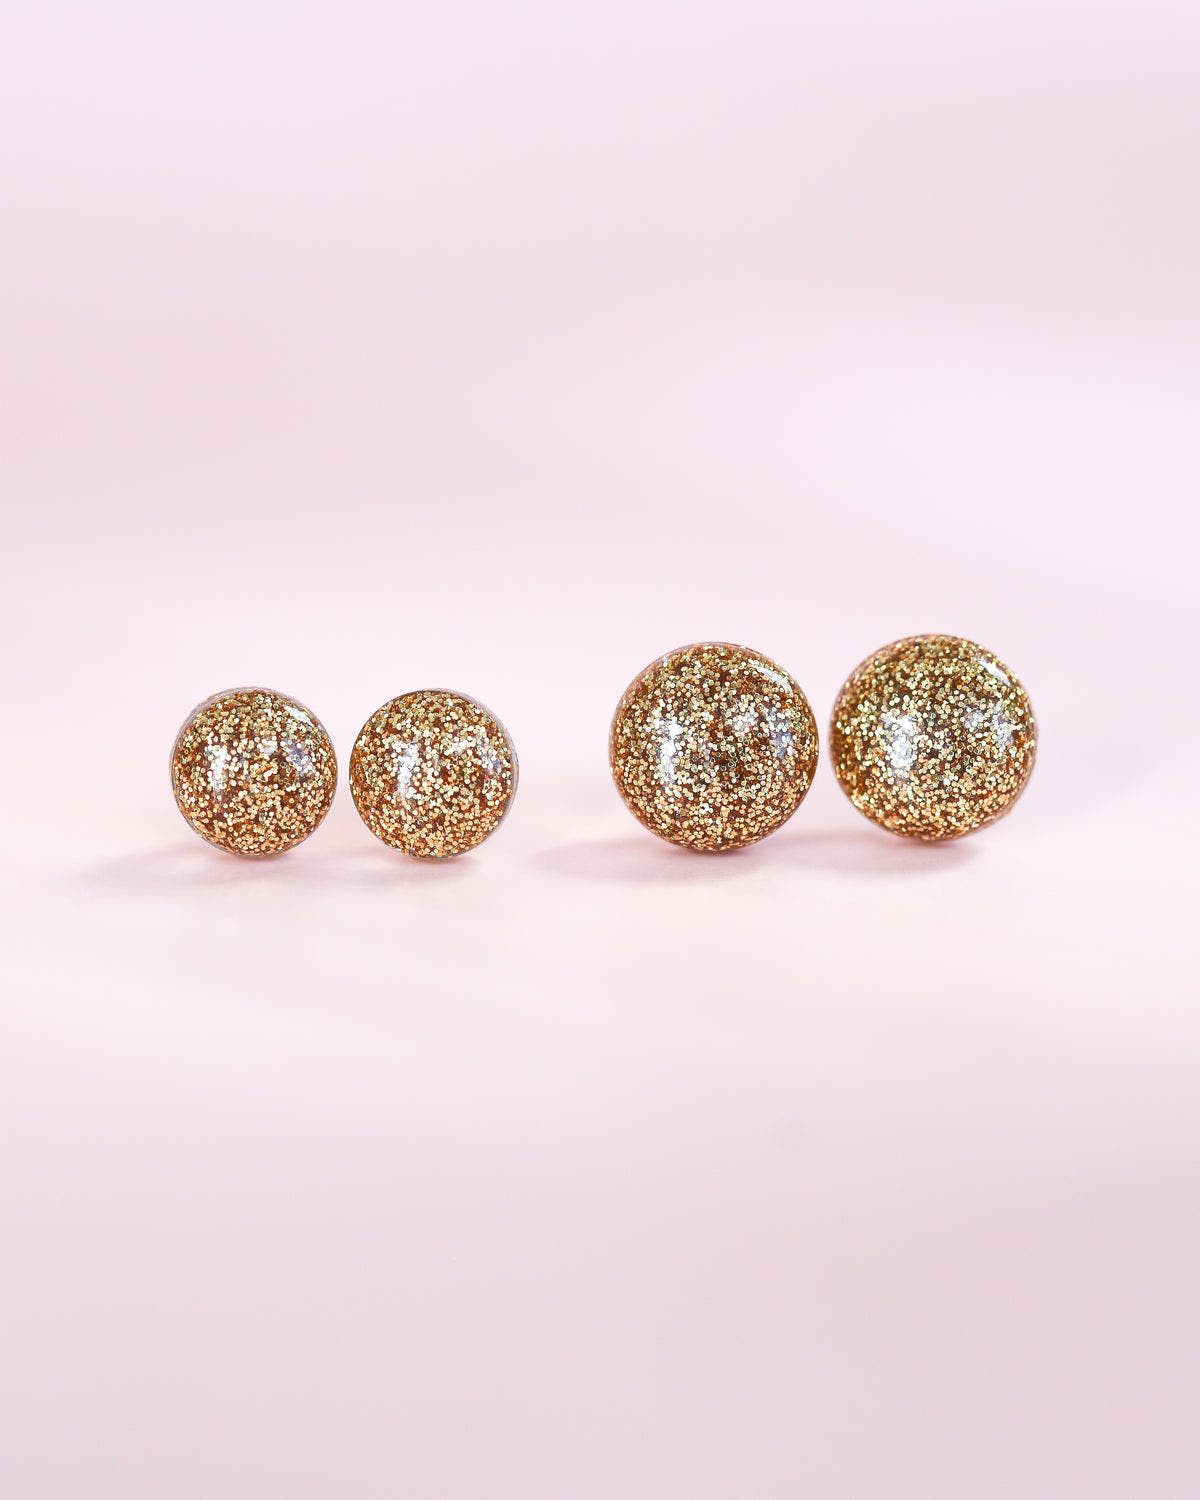 Golden sparkling studs earrings with surgical hypoallergenic steel posts Ollijewelry